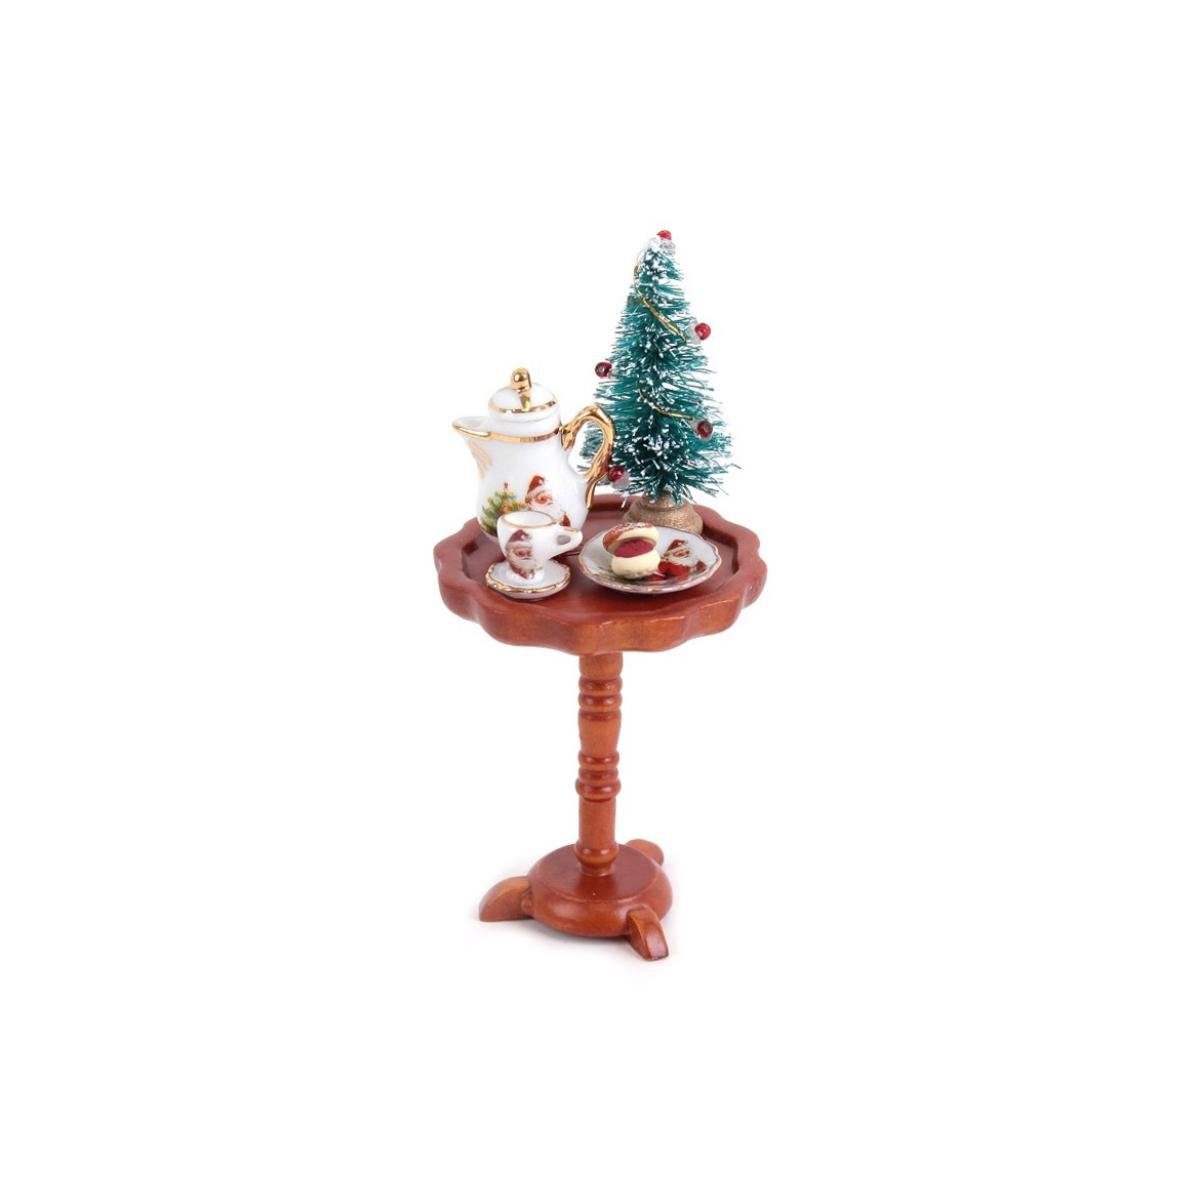 Reutter Porzellan Dekofigur 001.858/4 - Weihnachtstisch, Miniatur